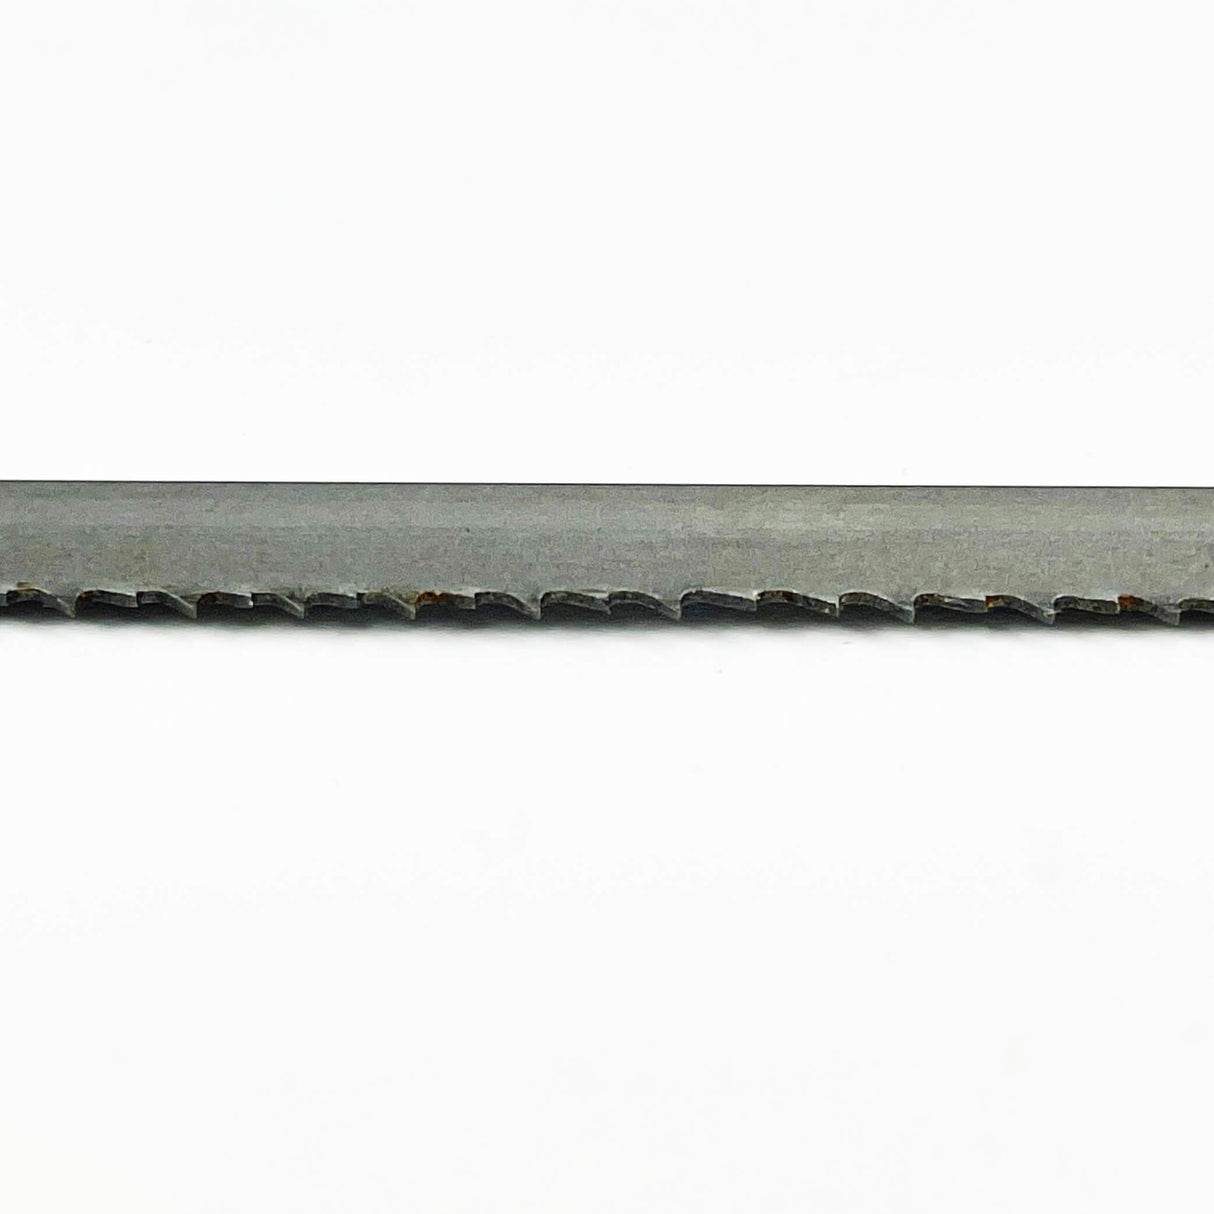 2135mm Long x 13mm Wide COBALT M42 Bi-Metal Band Saw - Pack of 2 Blades